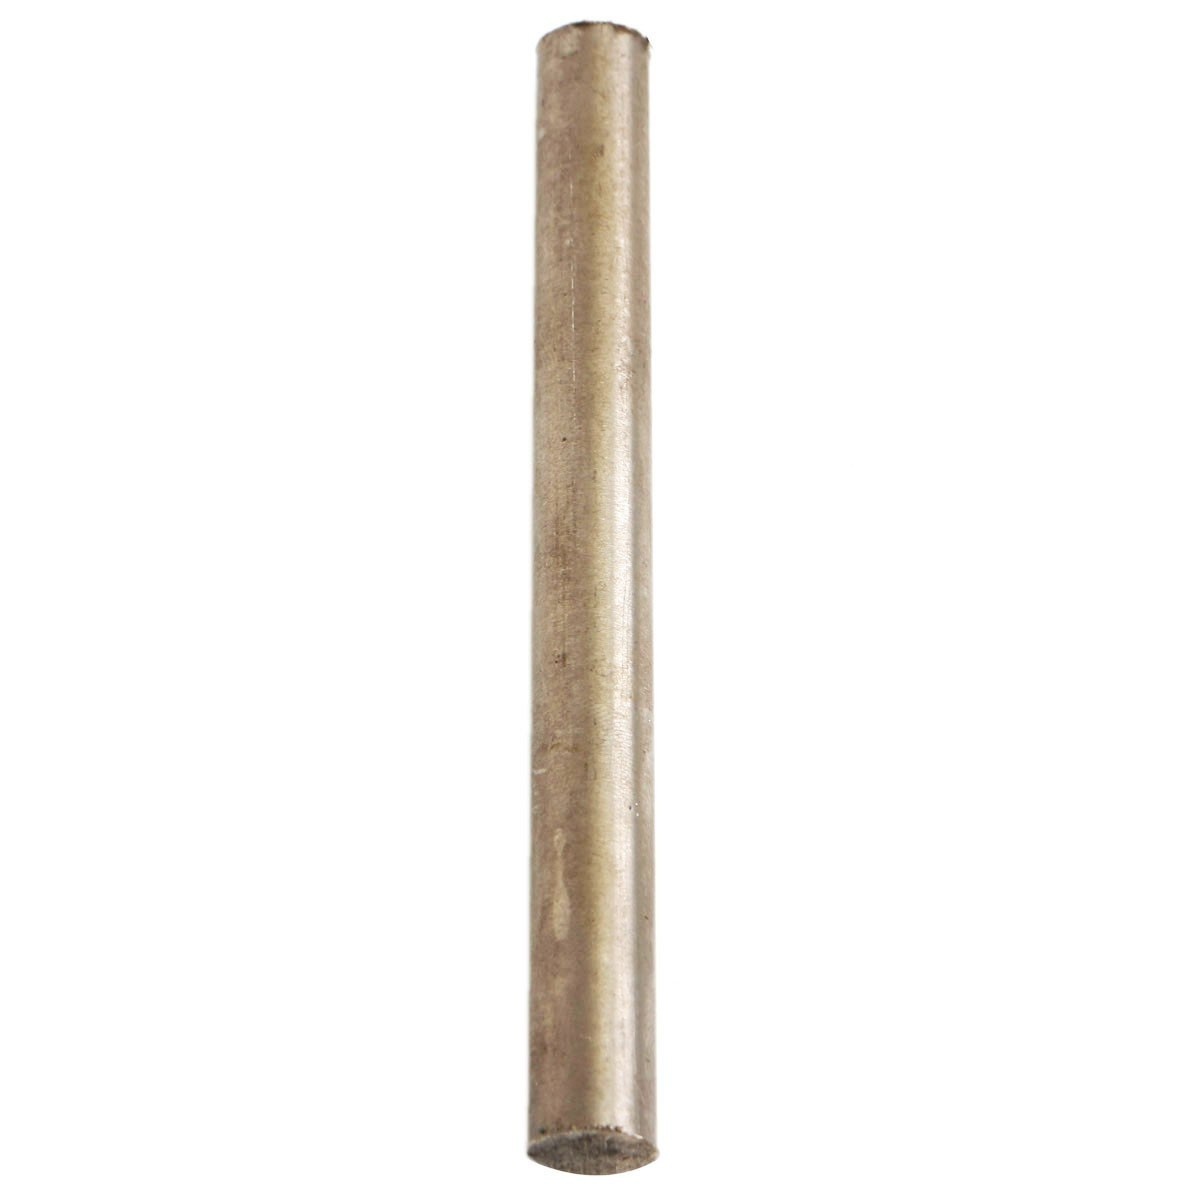 Titanium Ti Titan Gr.2 GR2 Metal Rod Round Bar Diameter 10mm Length 100mm 